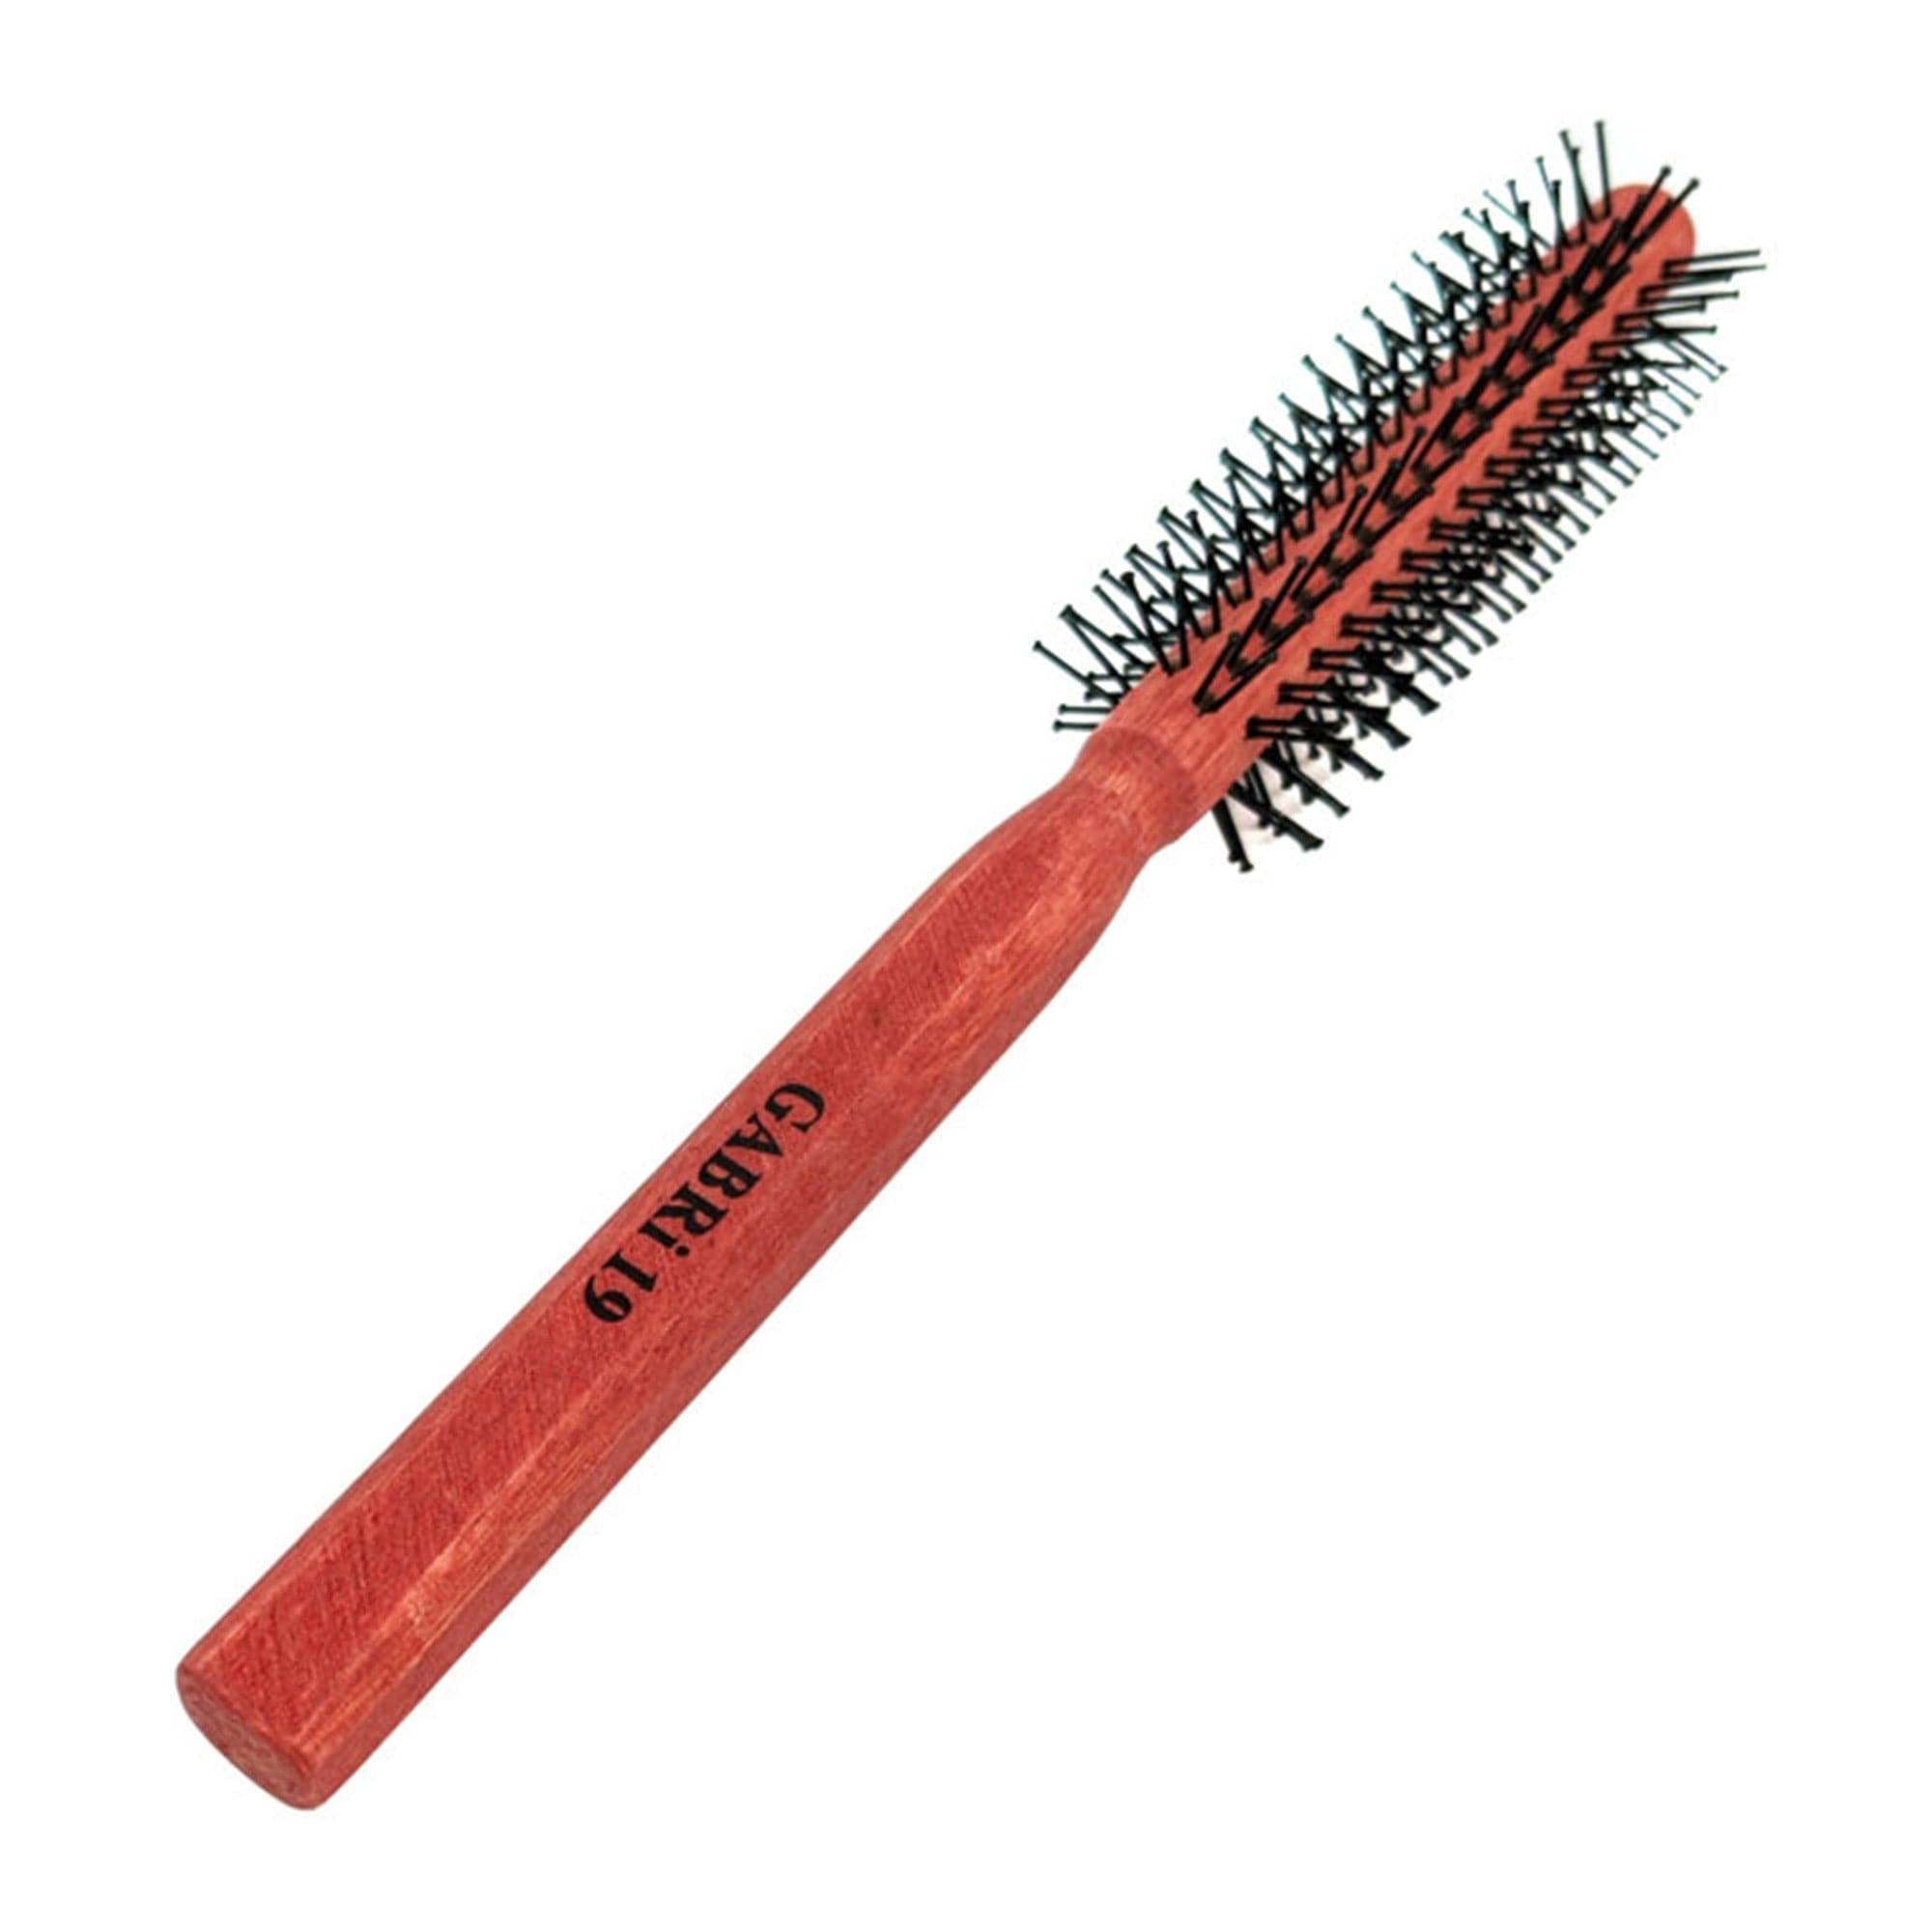 Eson - Round Hair Brush No.19 23x3cm